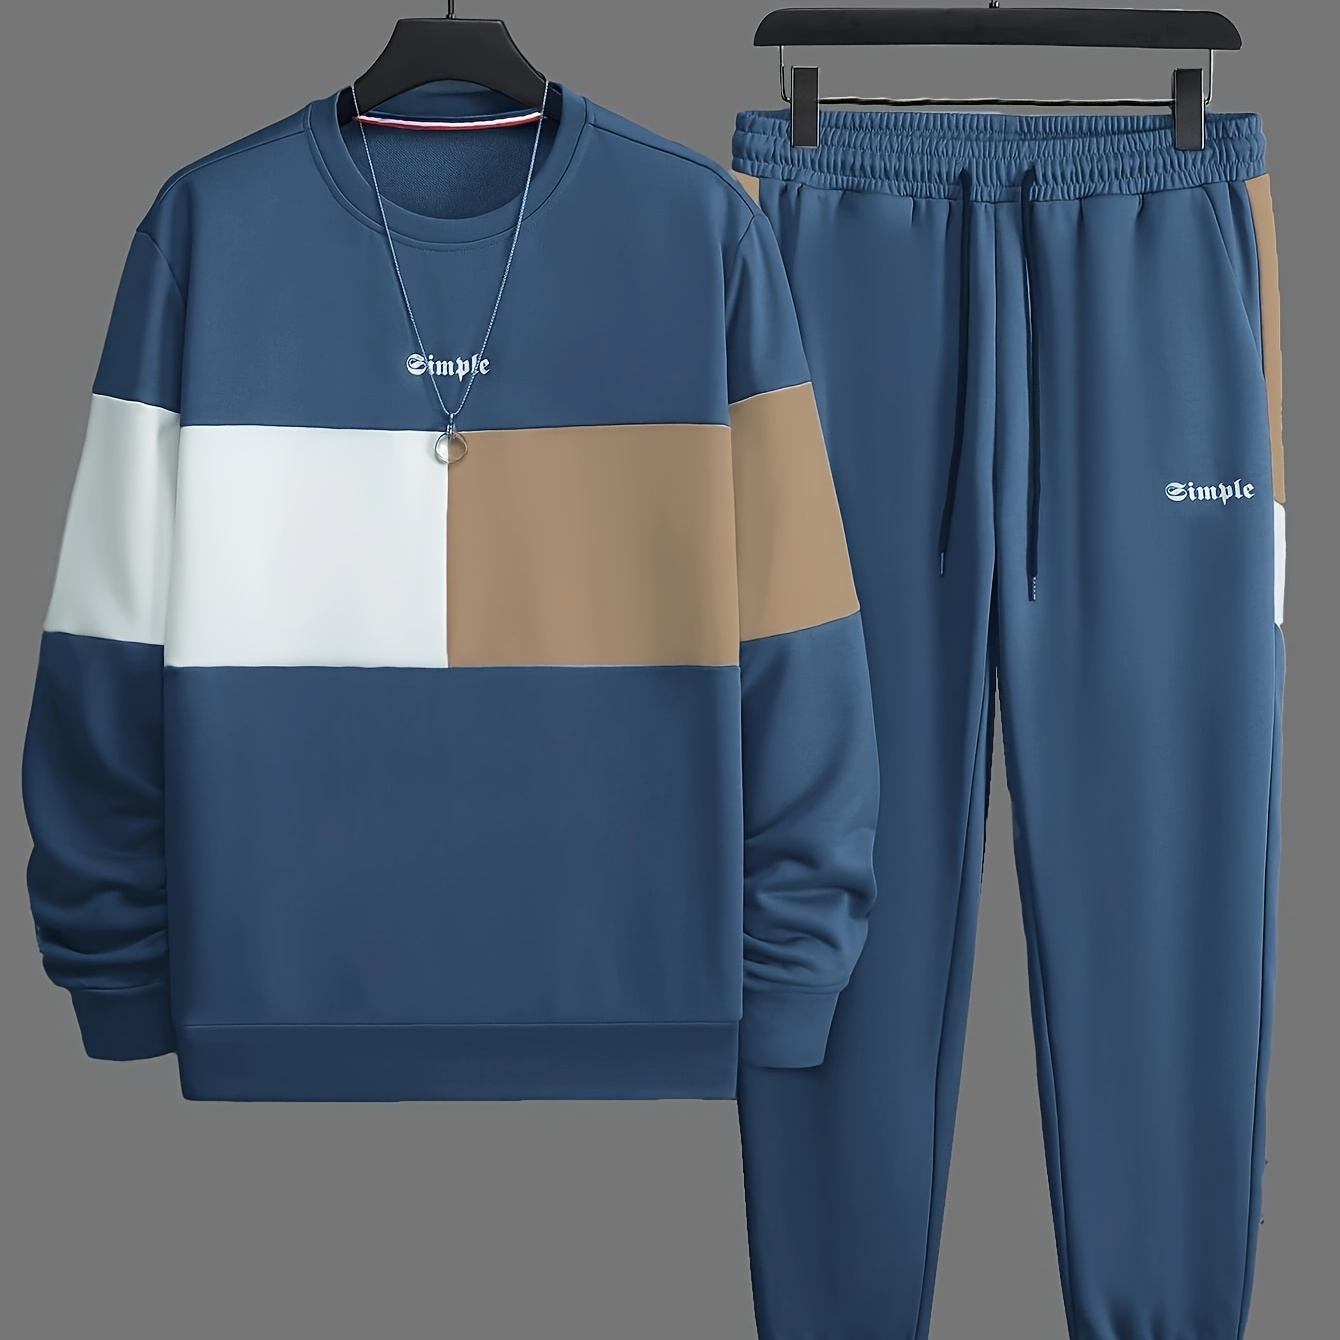 

Plus Size Men's "simple" Print Sweatshirt & Sweatpants Set For Autumn/spring, Contrast Color Thin 2pcs Outfits For Sports/outdoor, Men's Clothing